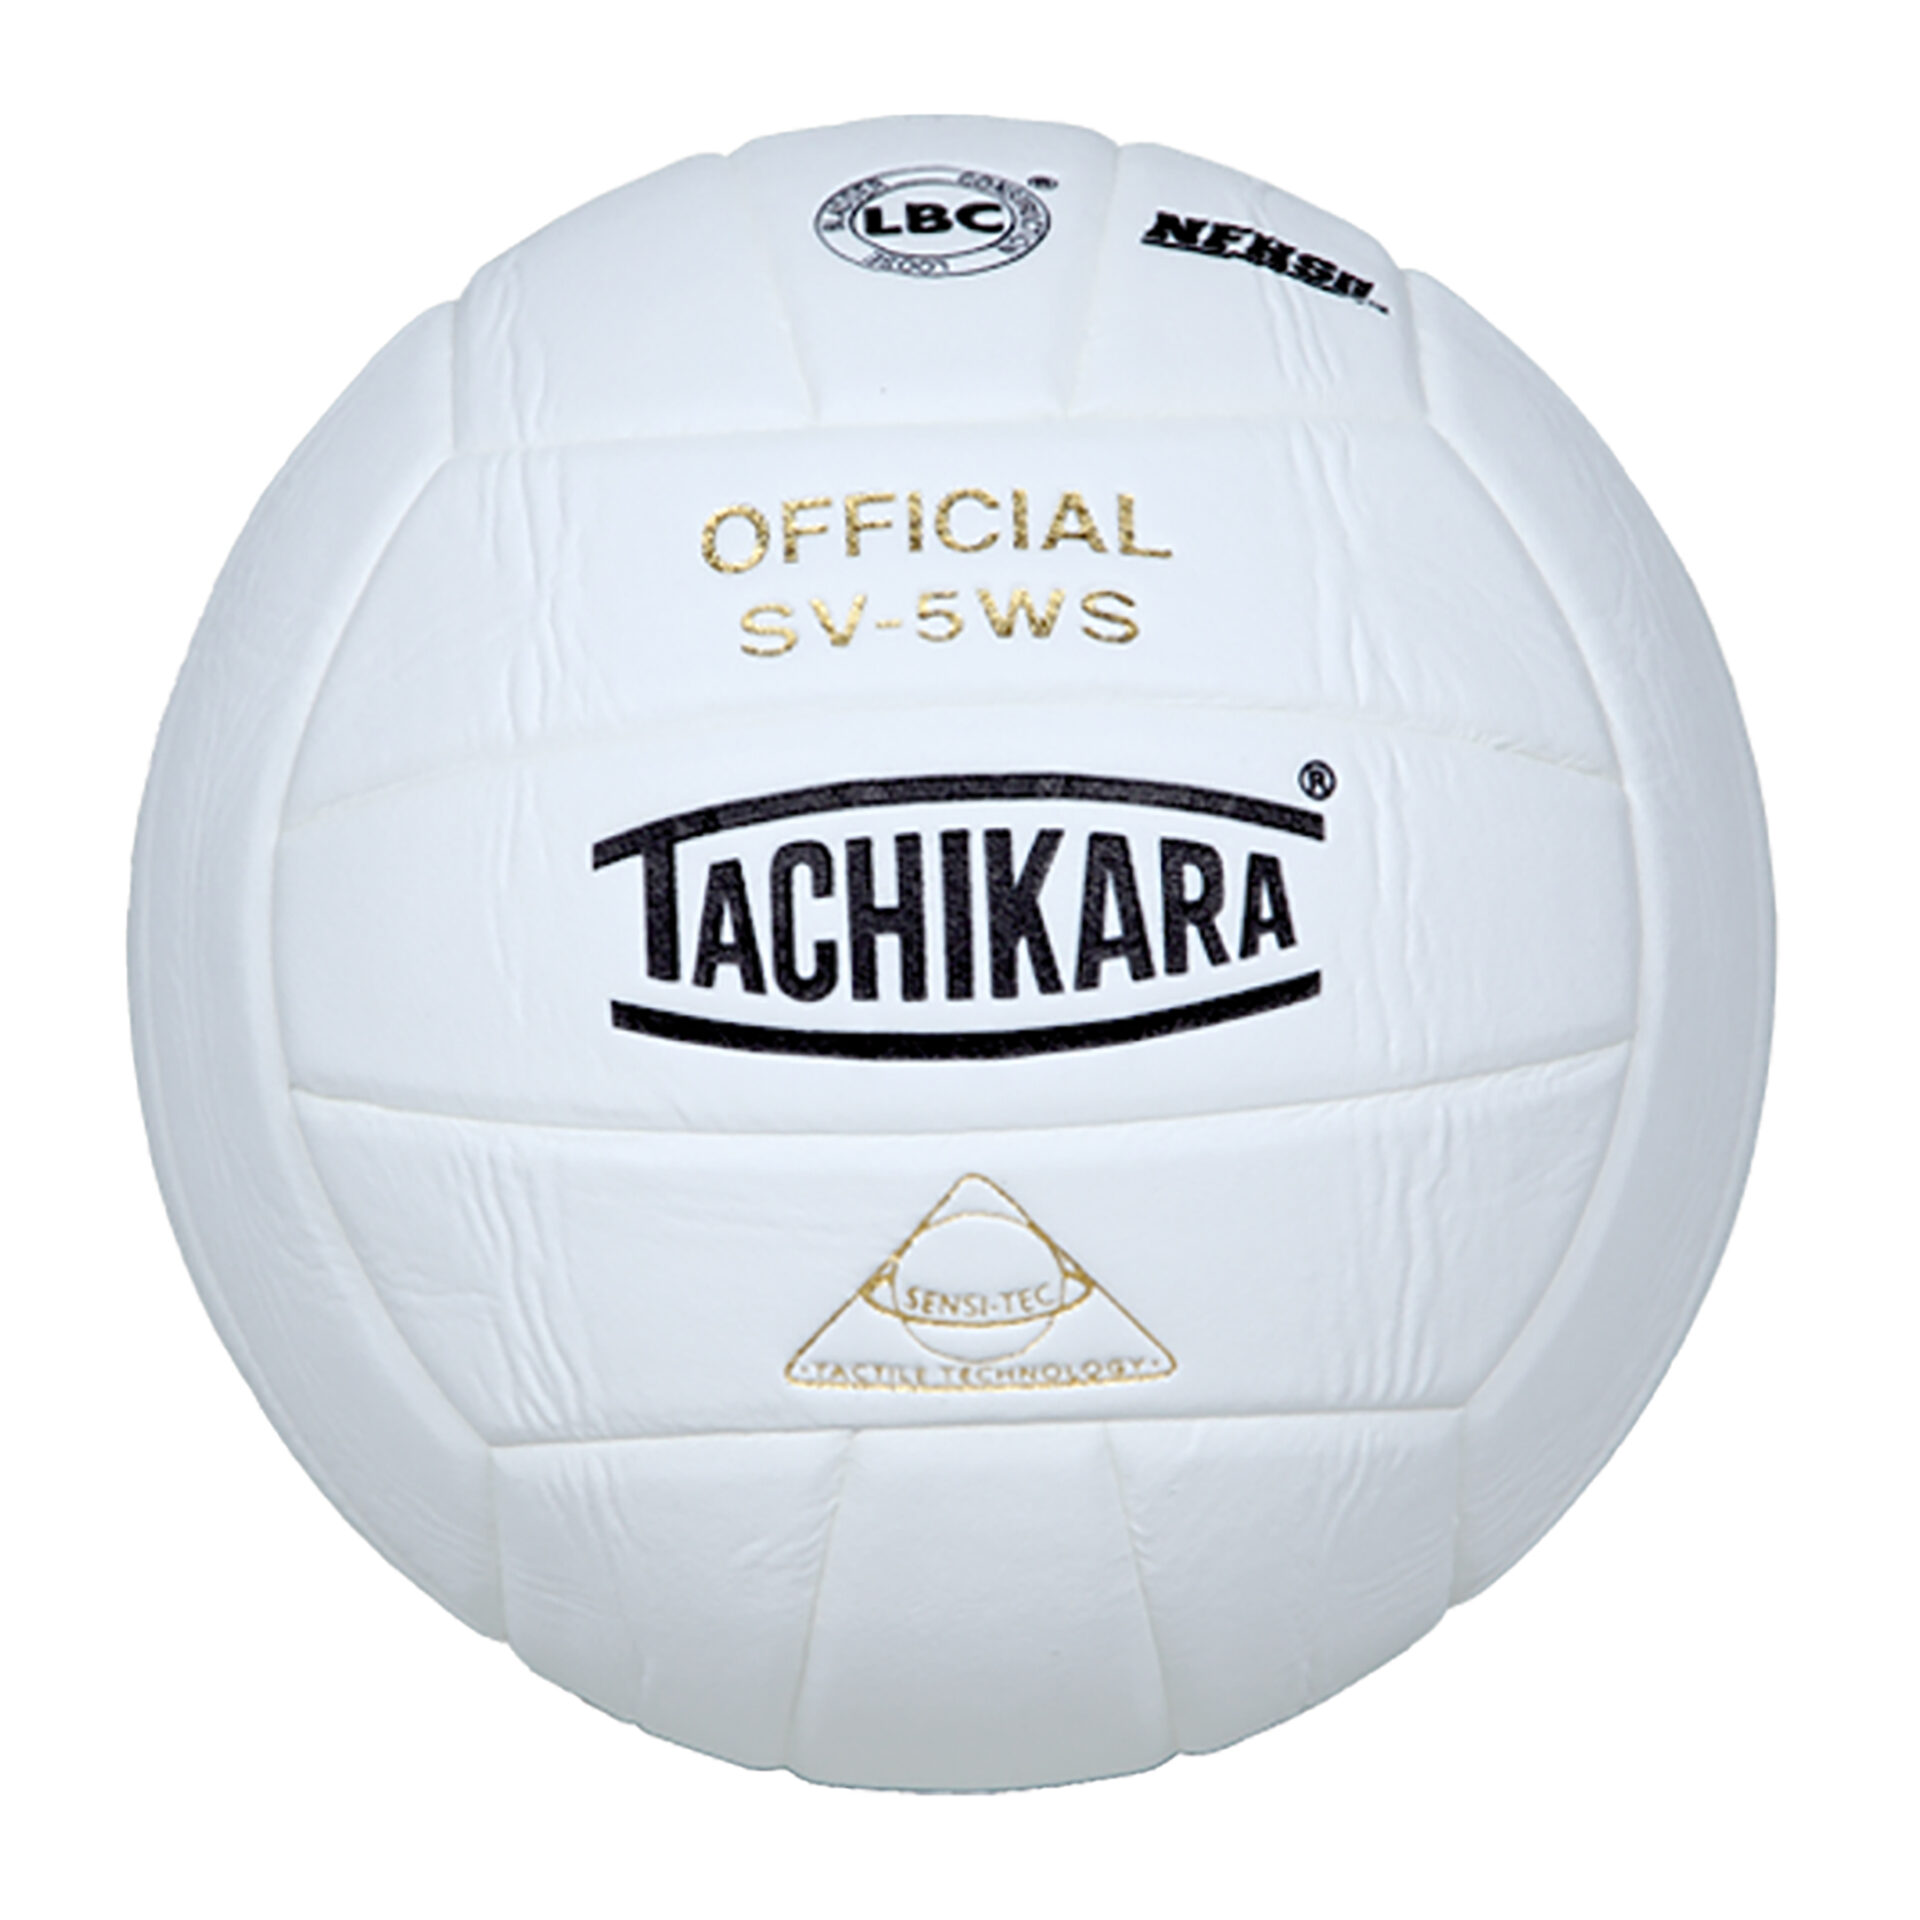 Tachikara SV5WS Volleyball | Durable, Quality